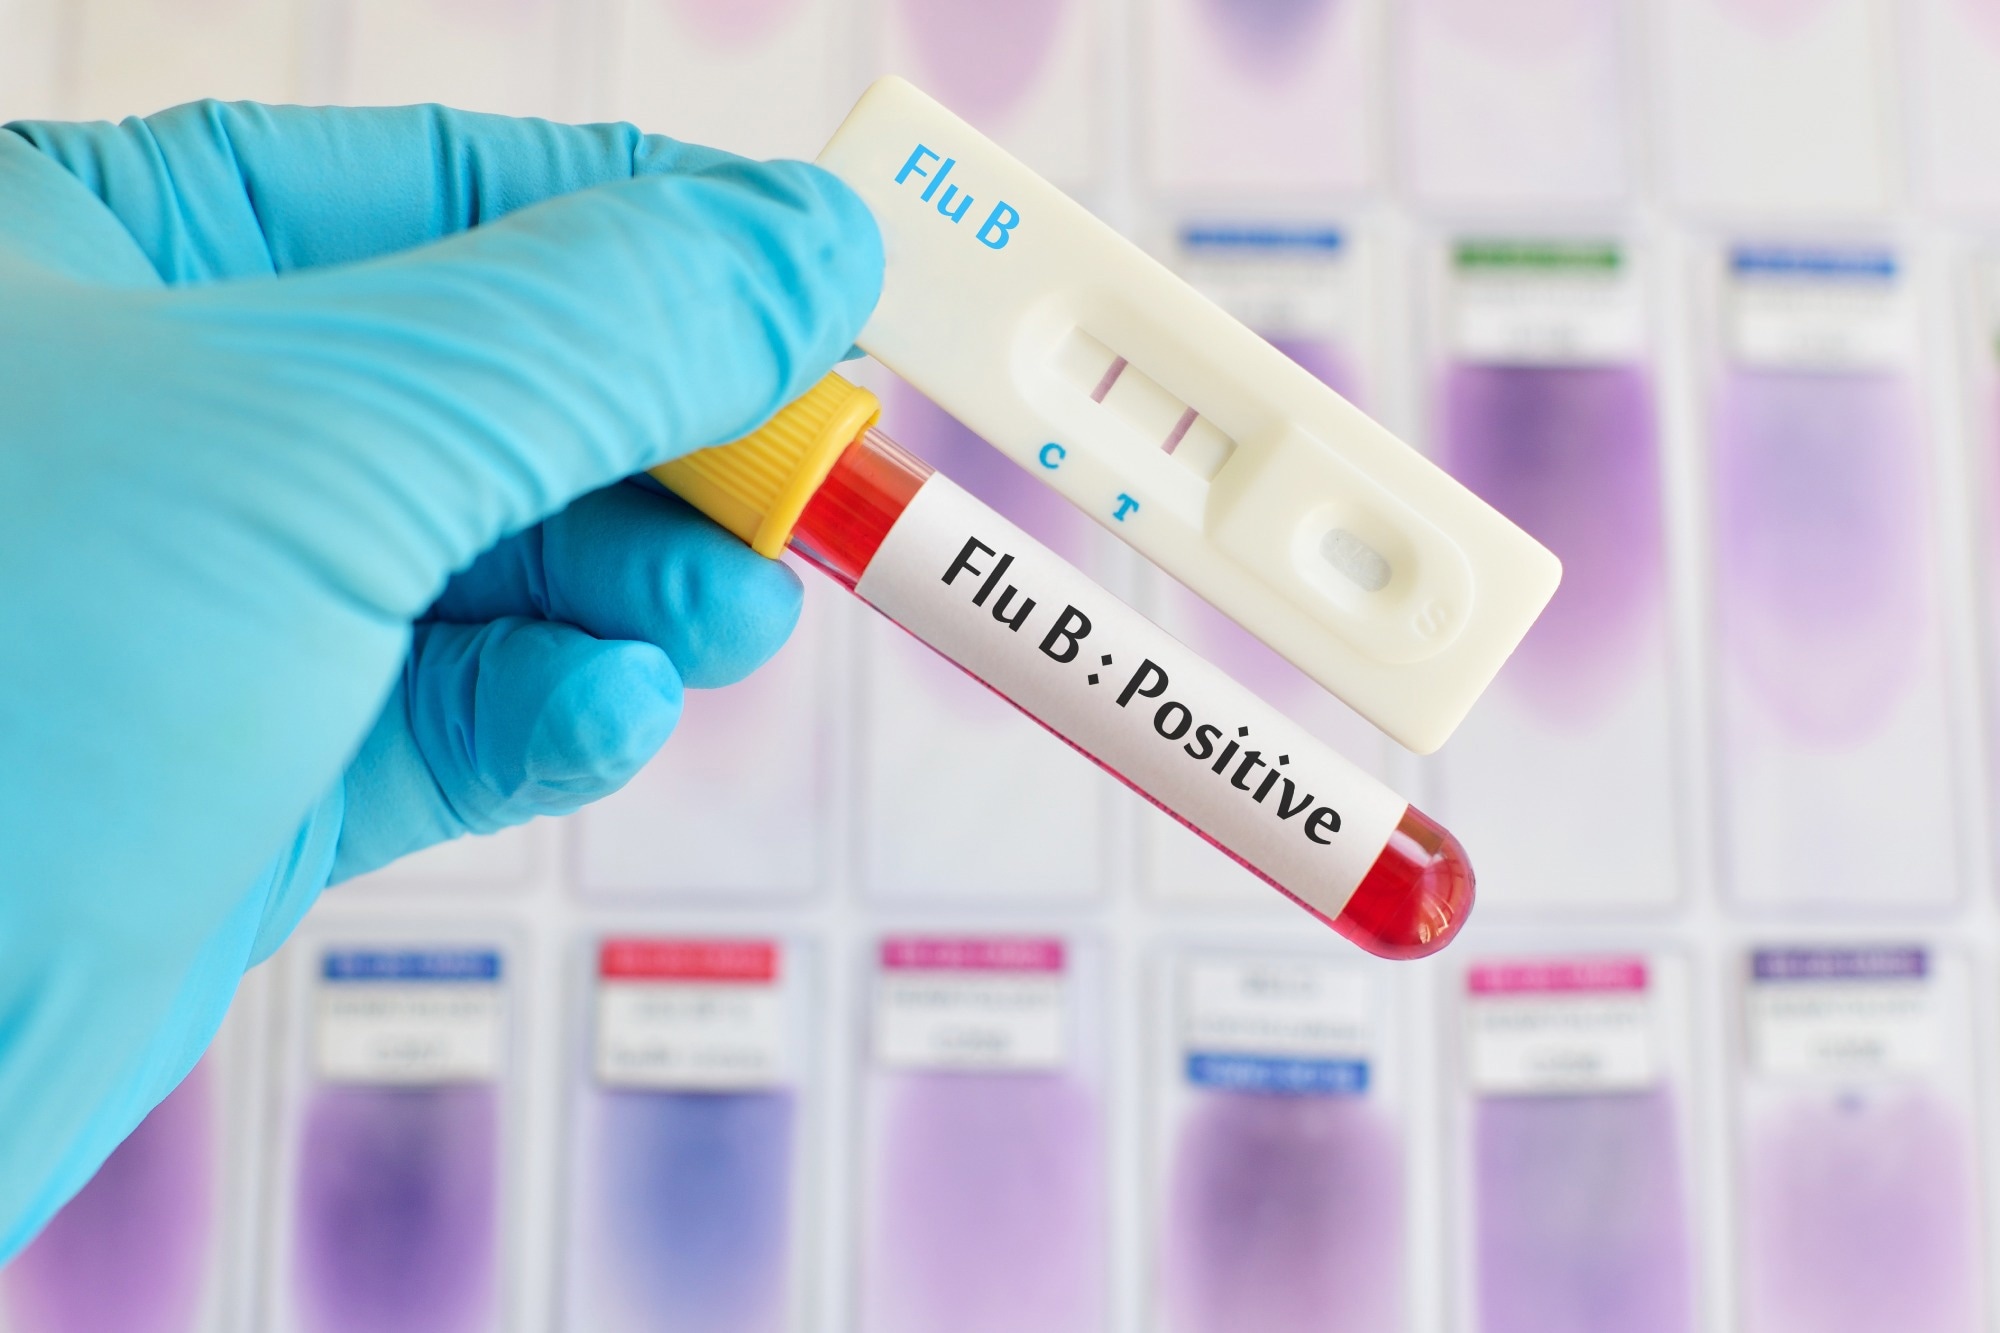 Influenza B Virus Detection with QD-based Fluorescence Biosensors